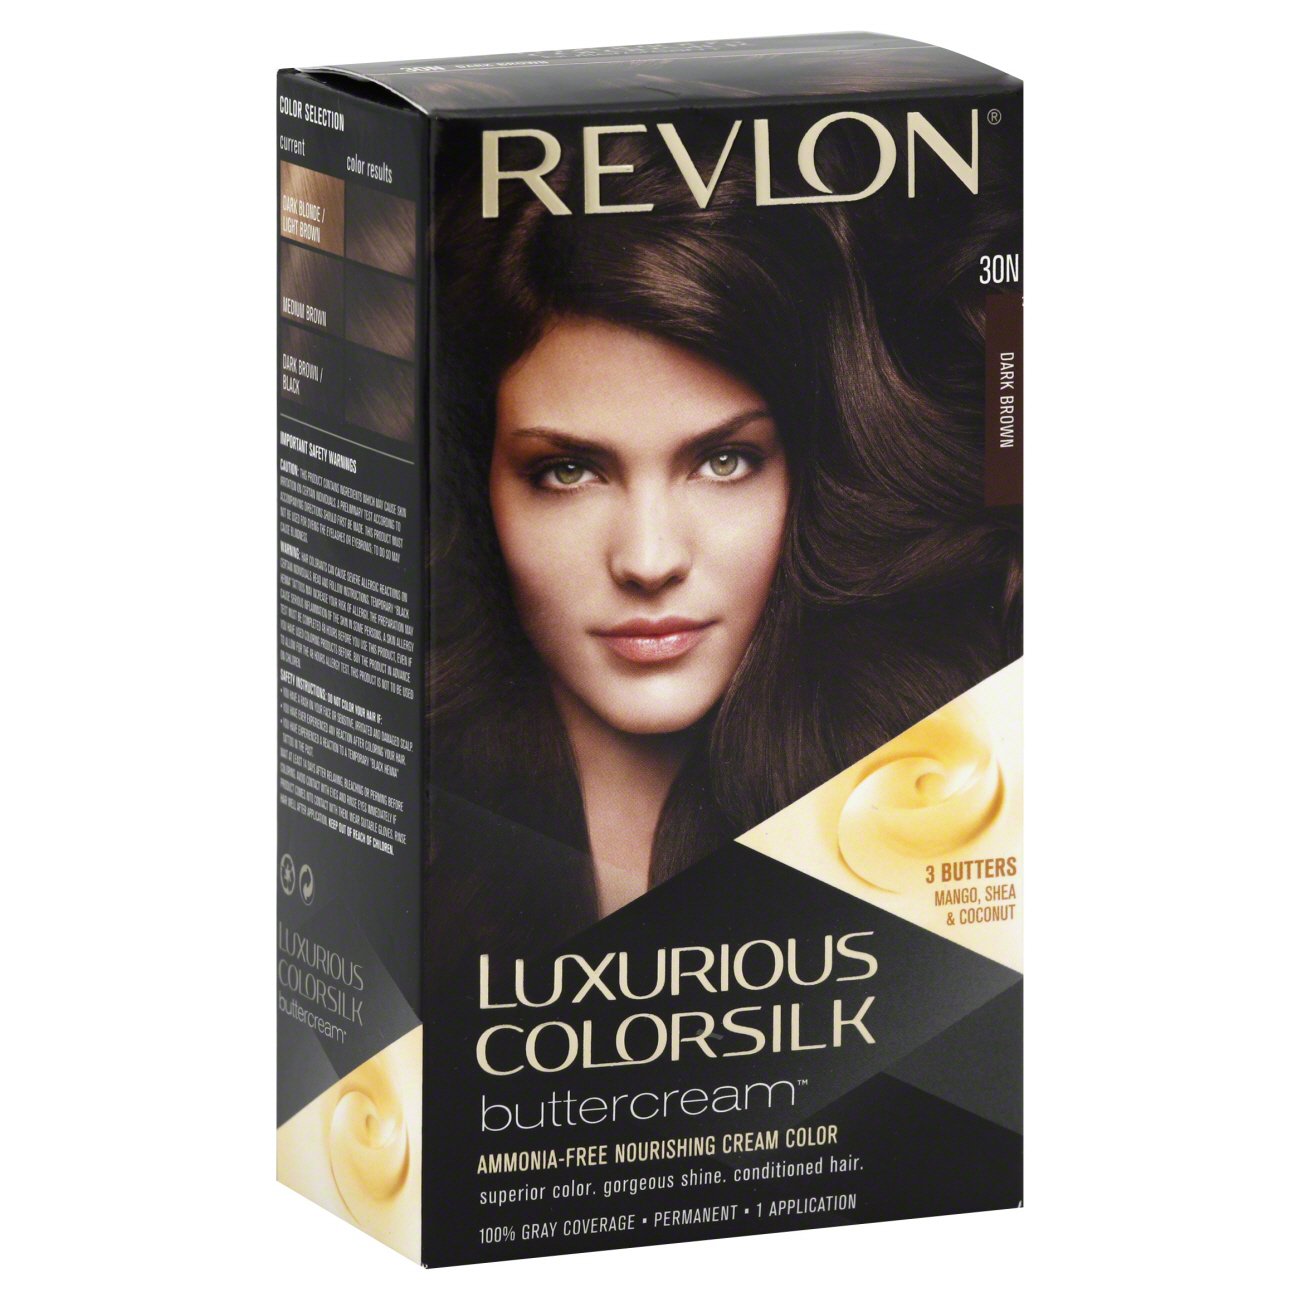 Revlon Colorsilk Luxurious Buttercream 30N Dark Brown Permanent Color -  Shop Hair Care at H-E-B